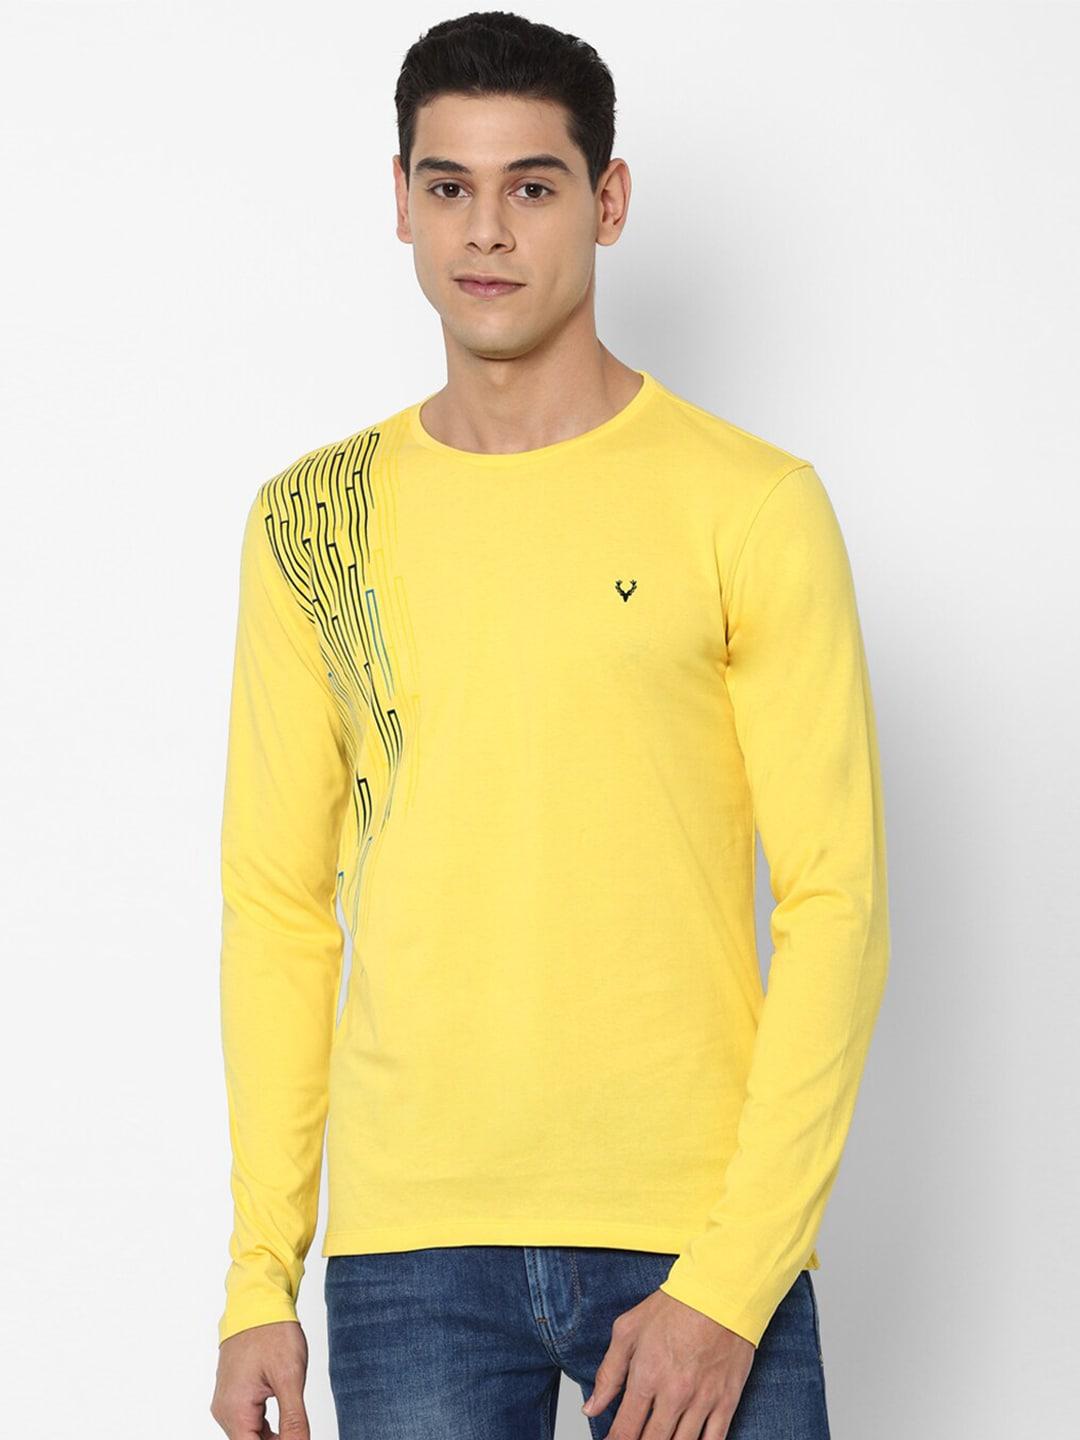 allen solly men yellow t-shirt